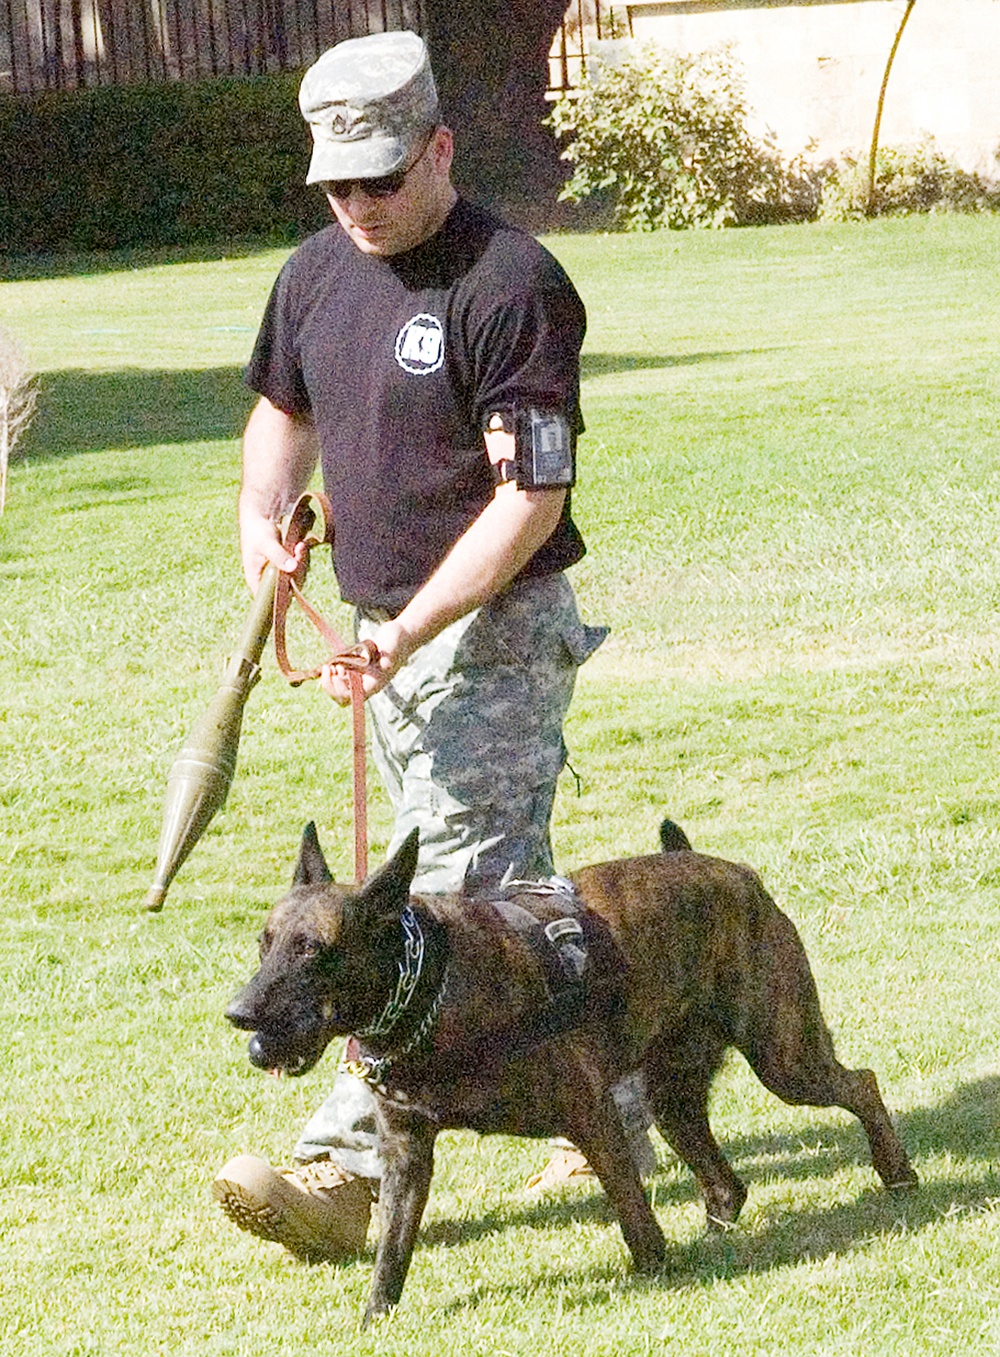 Dog Teams Keep International Zone Safe